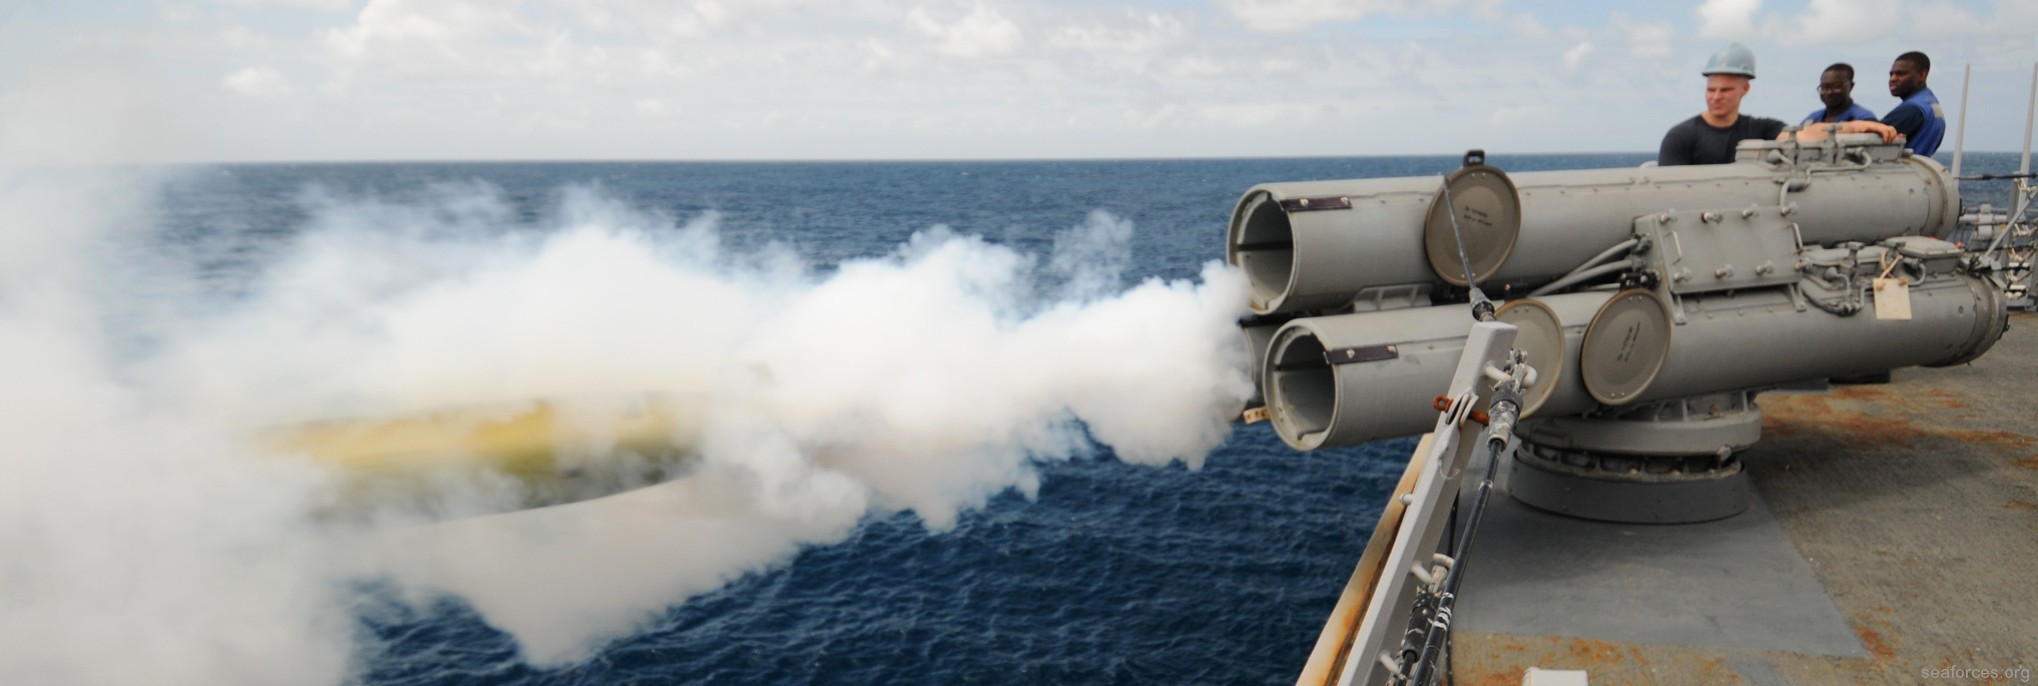 ddg-57 uss mitscher guided missile destroyer us navy 39 torpedo exercise